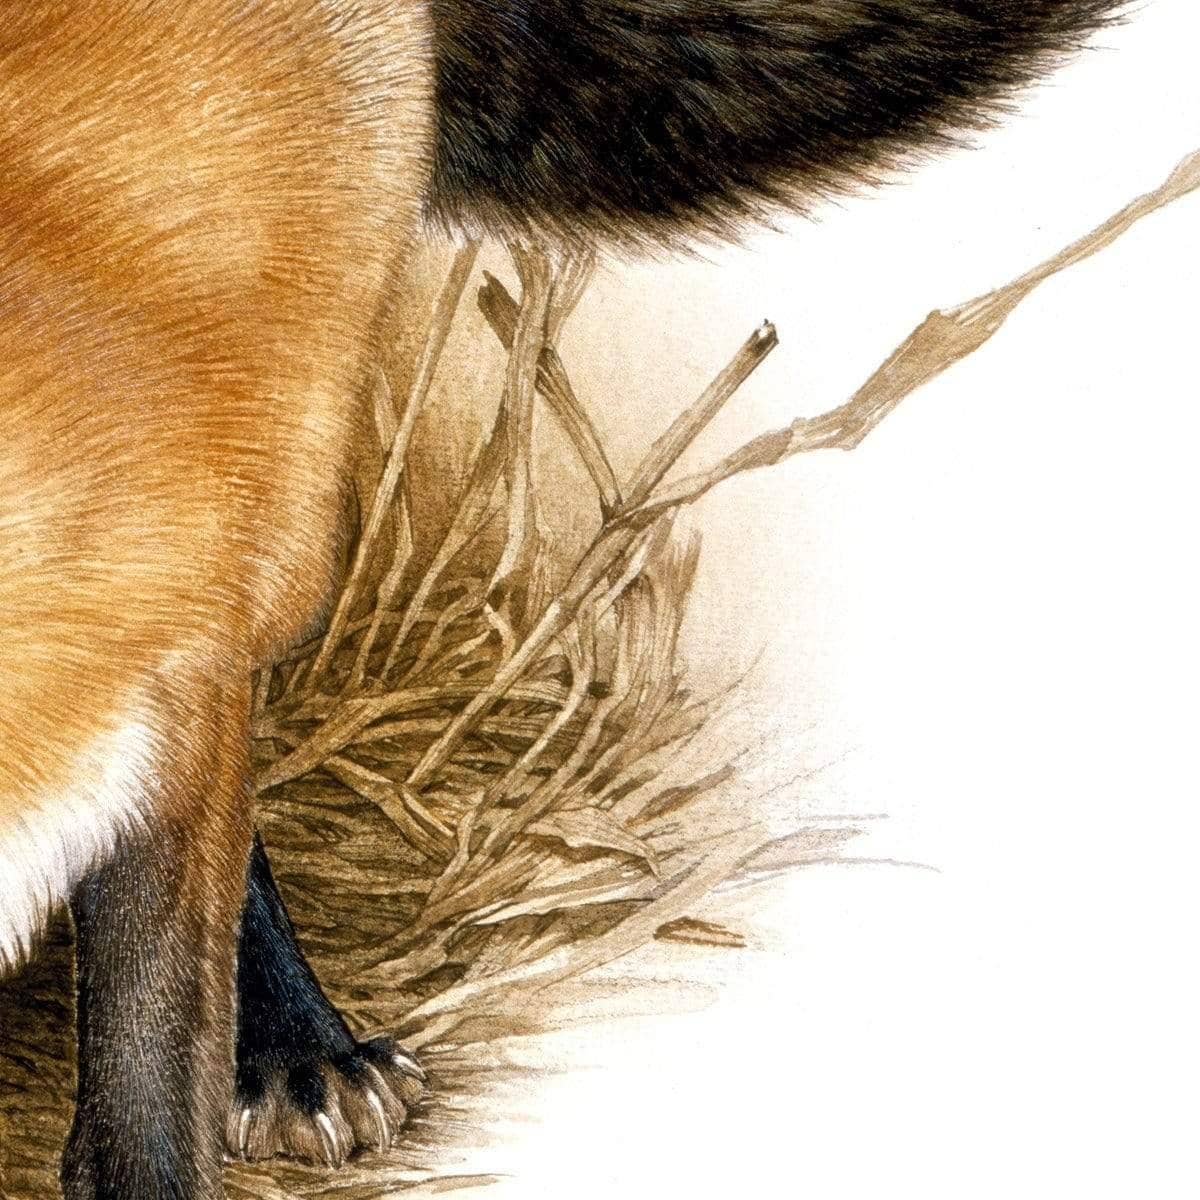 Red Fox - Art Print | Artwork by Glen Loates